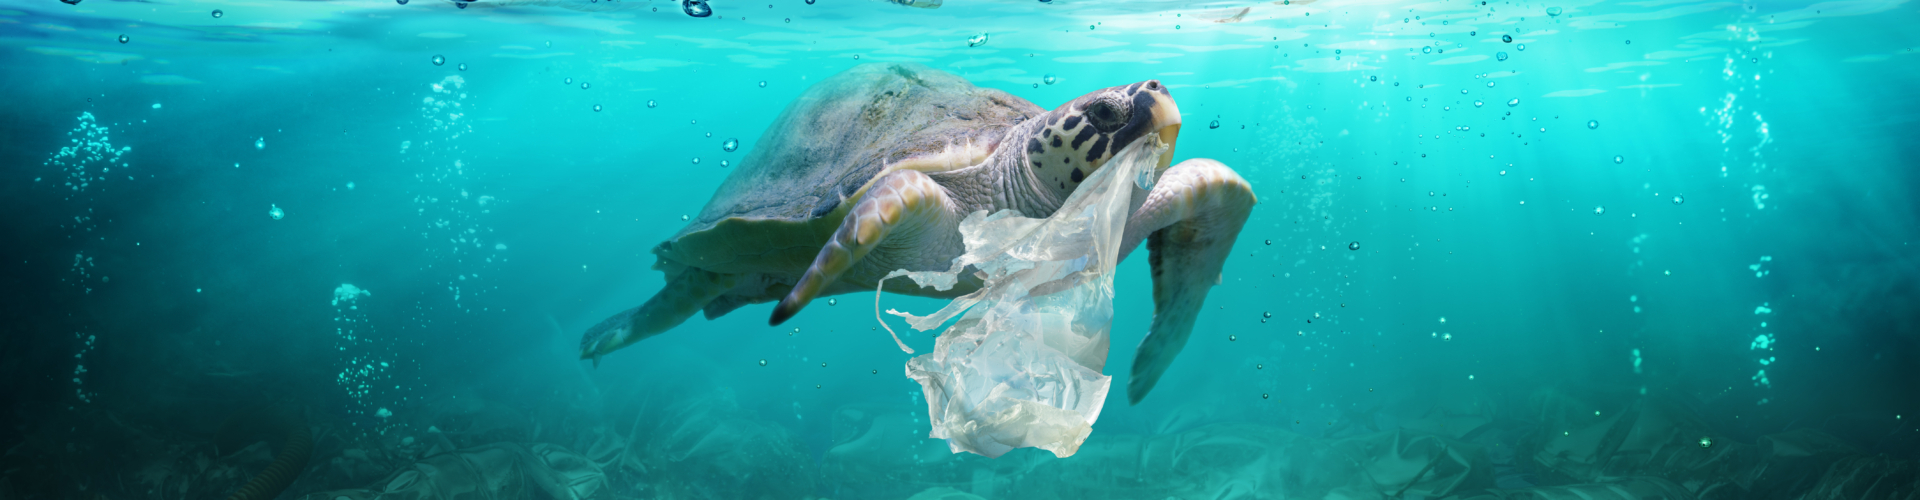 Het plastic afval probleem in Indonesië